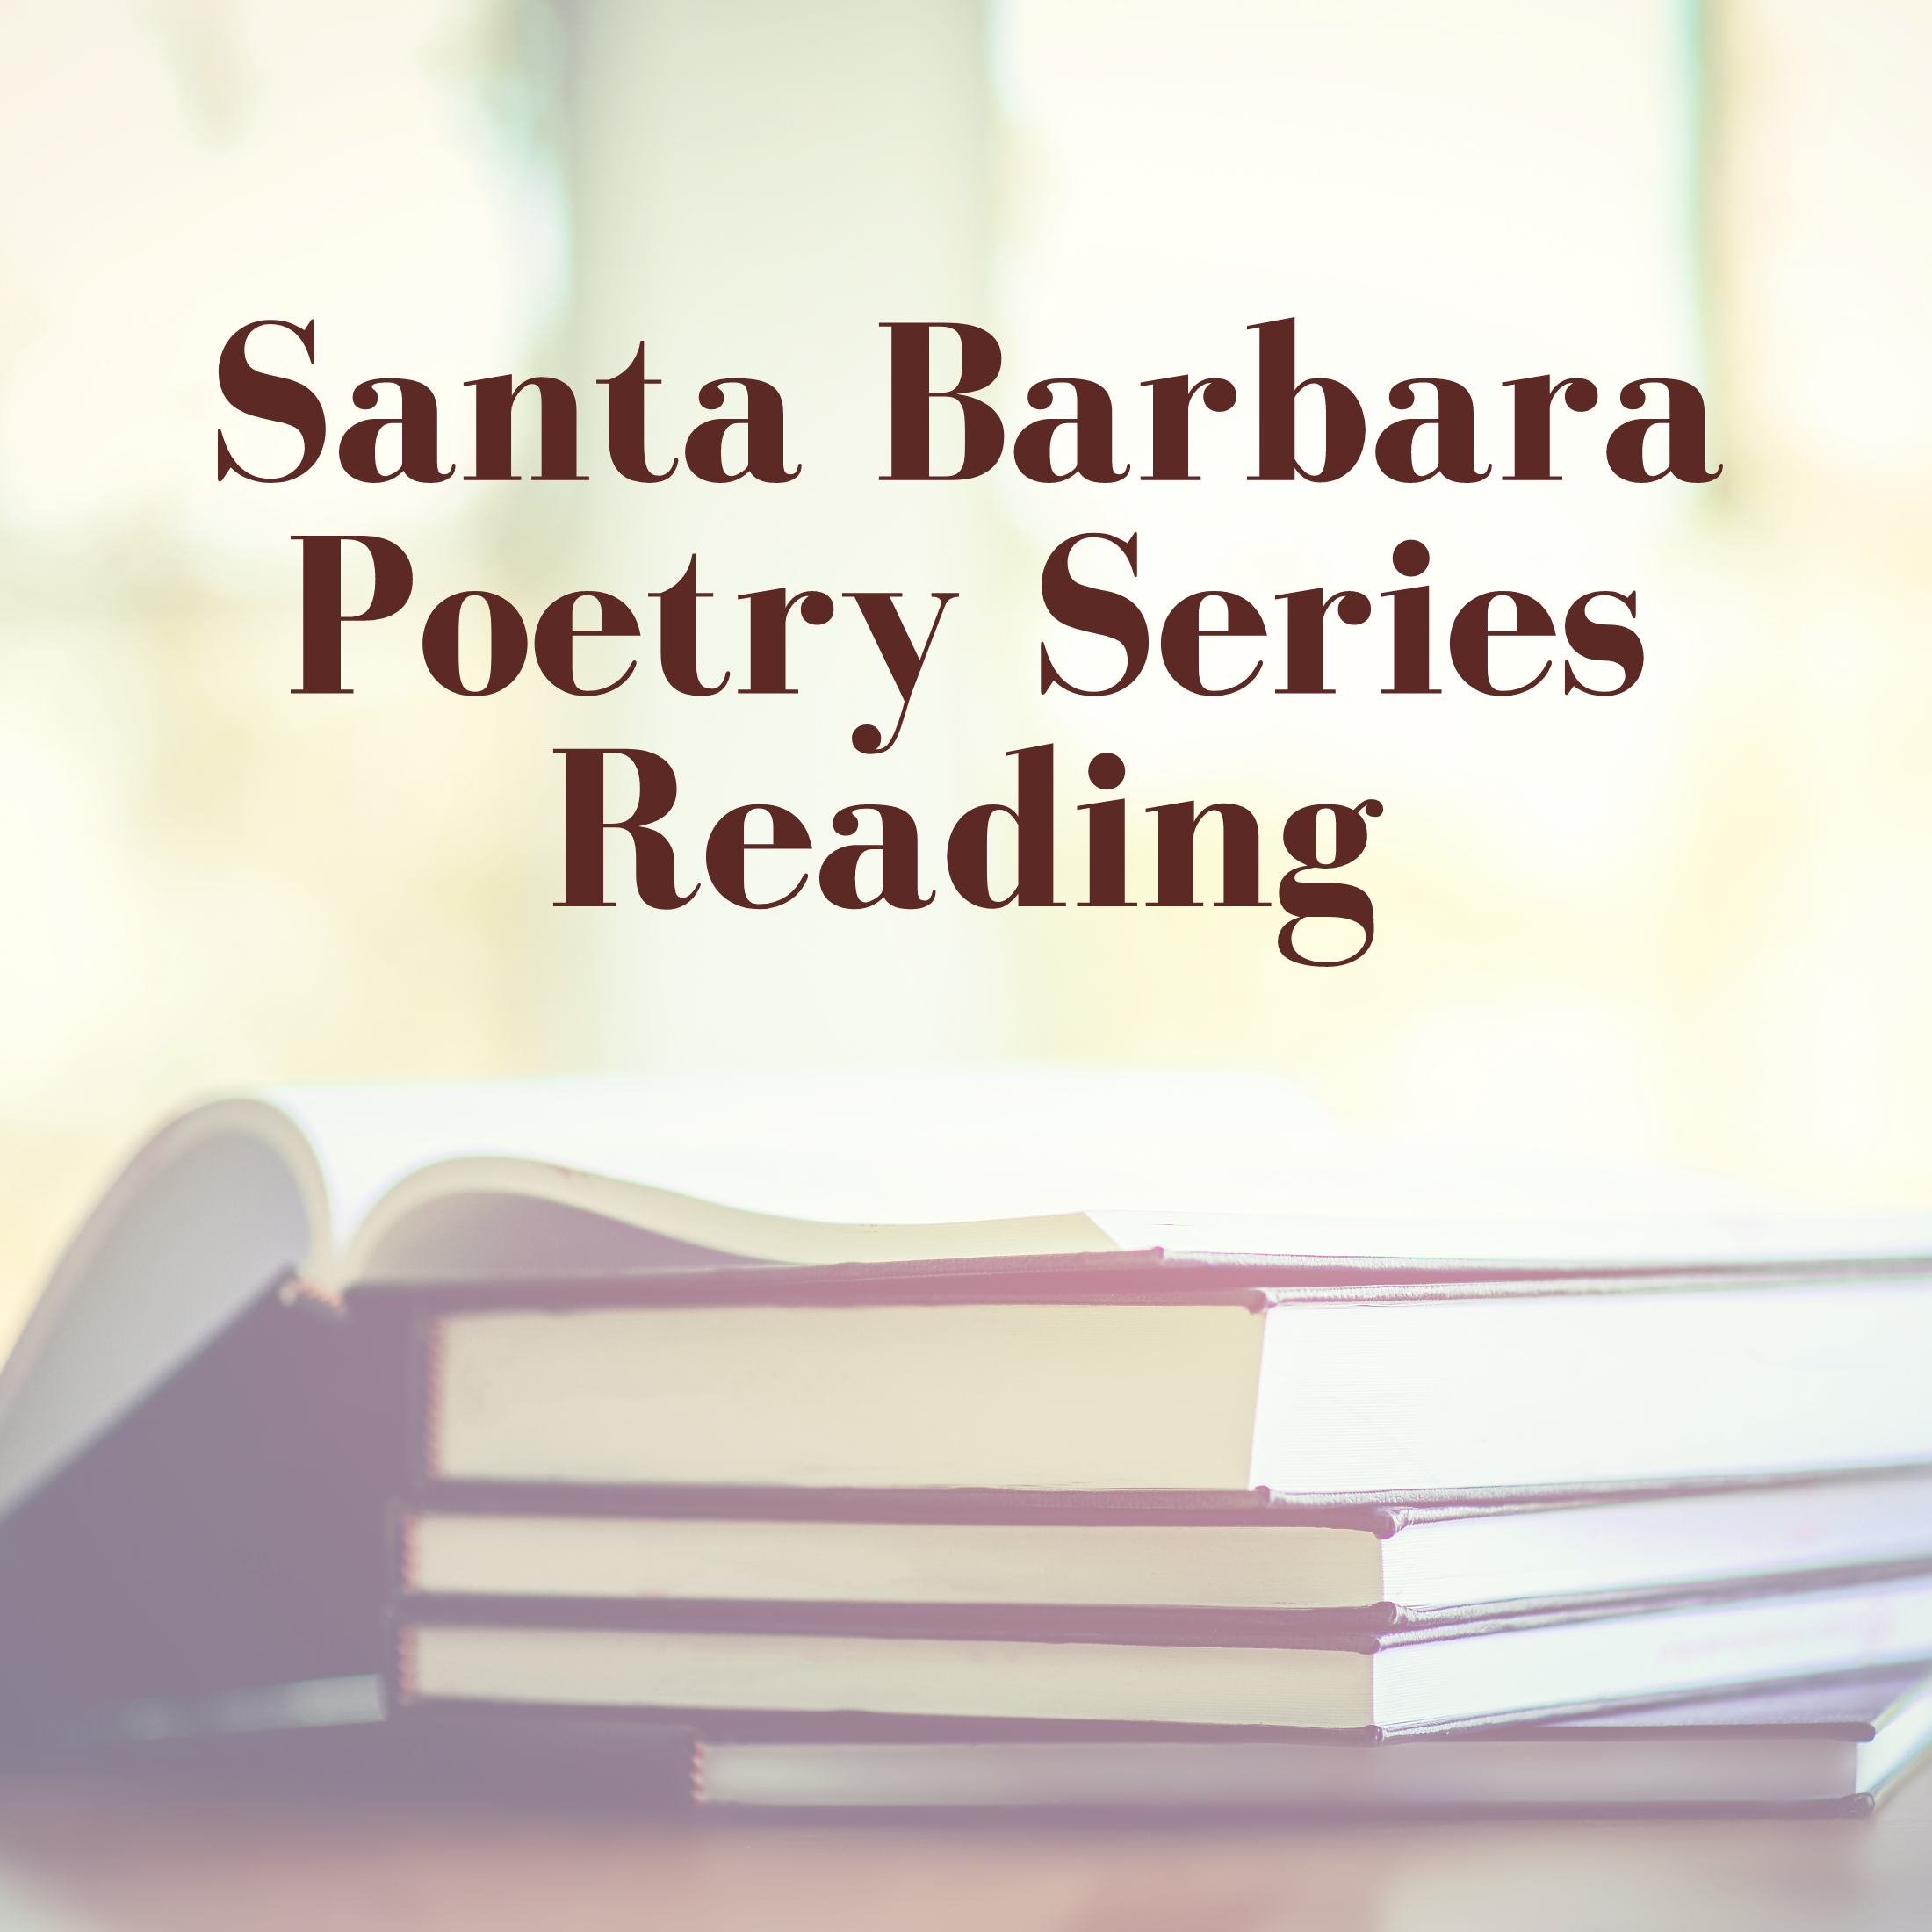 Santa Barbara Poetry Series Reading